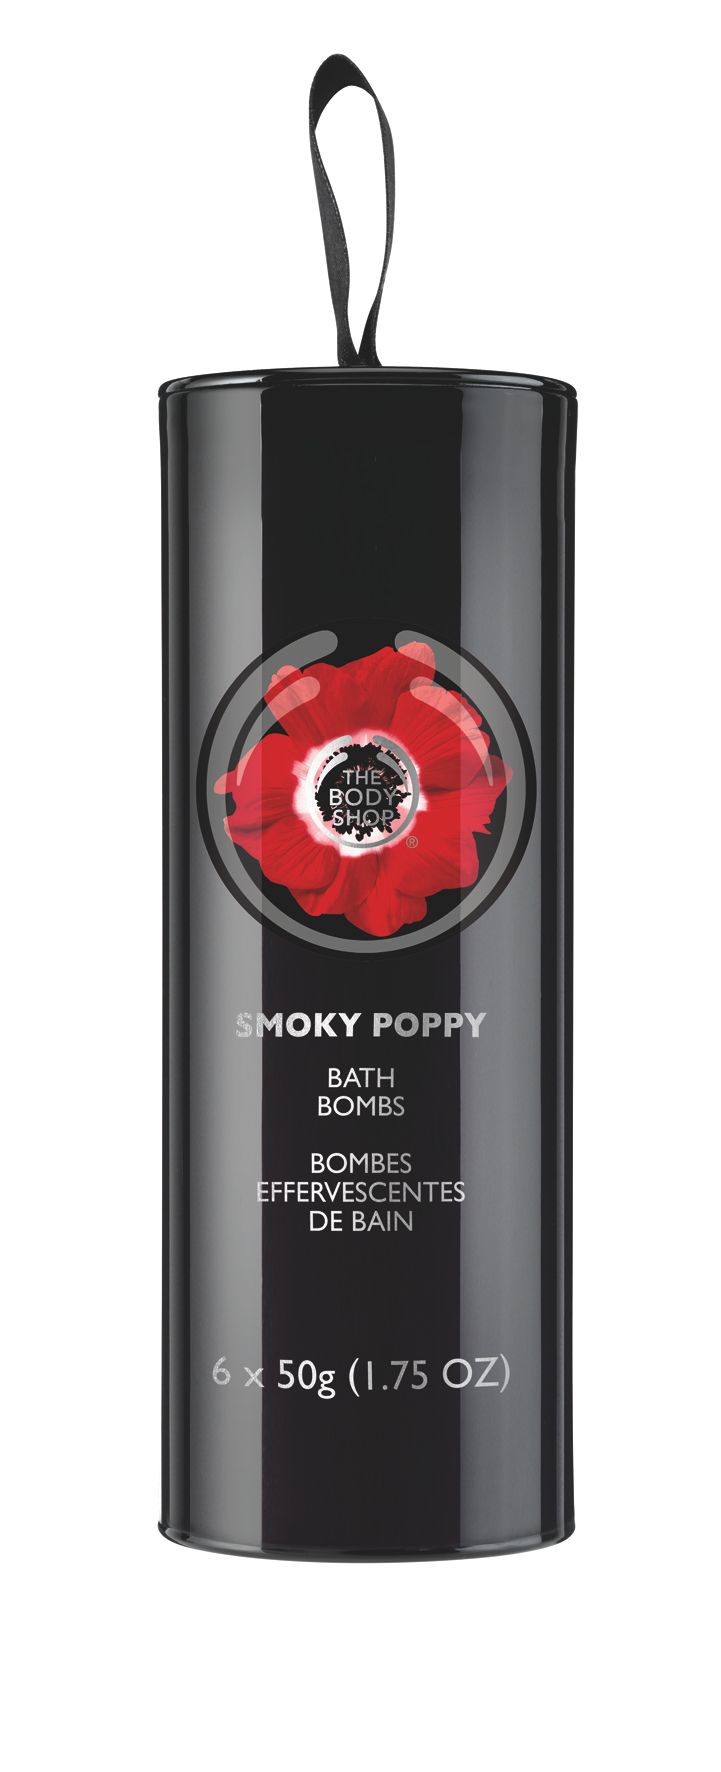 Smoky Poppy Bath Bombs